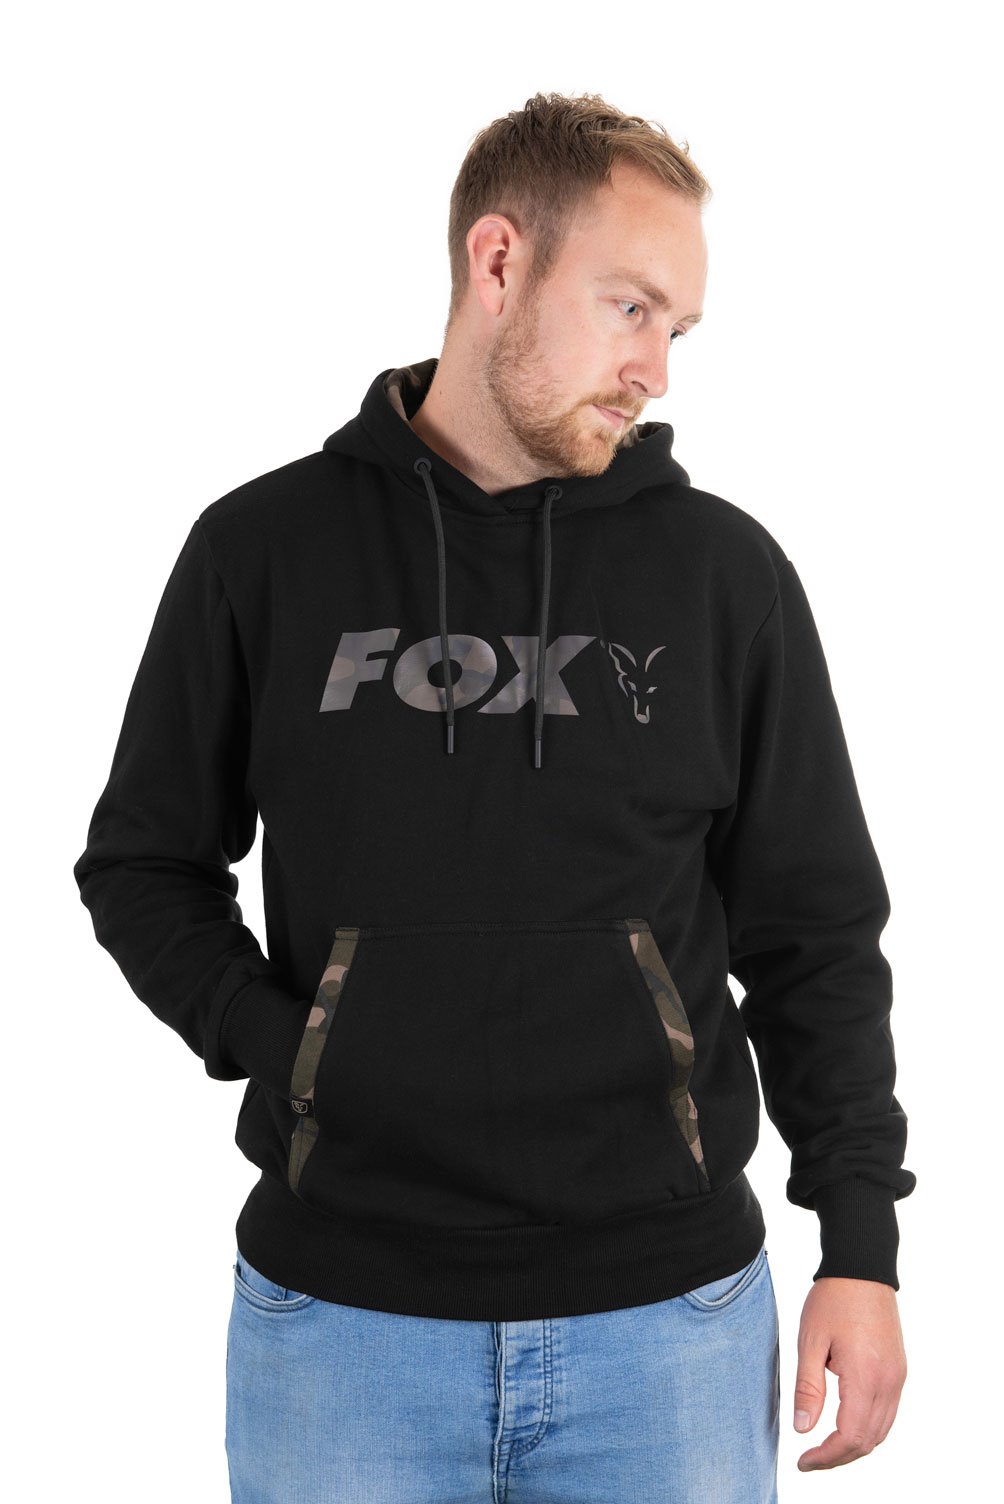 Fox Black/Camo Hoody Clothing